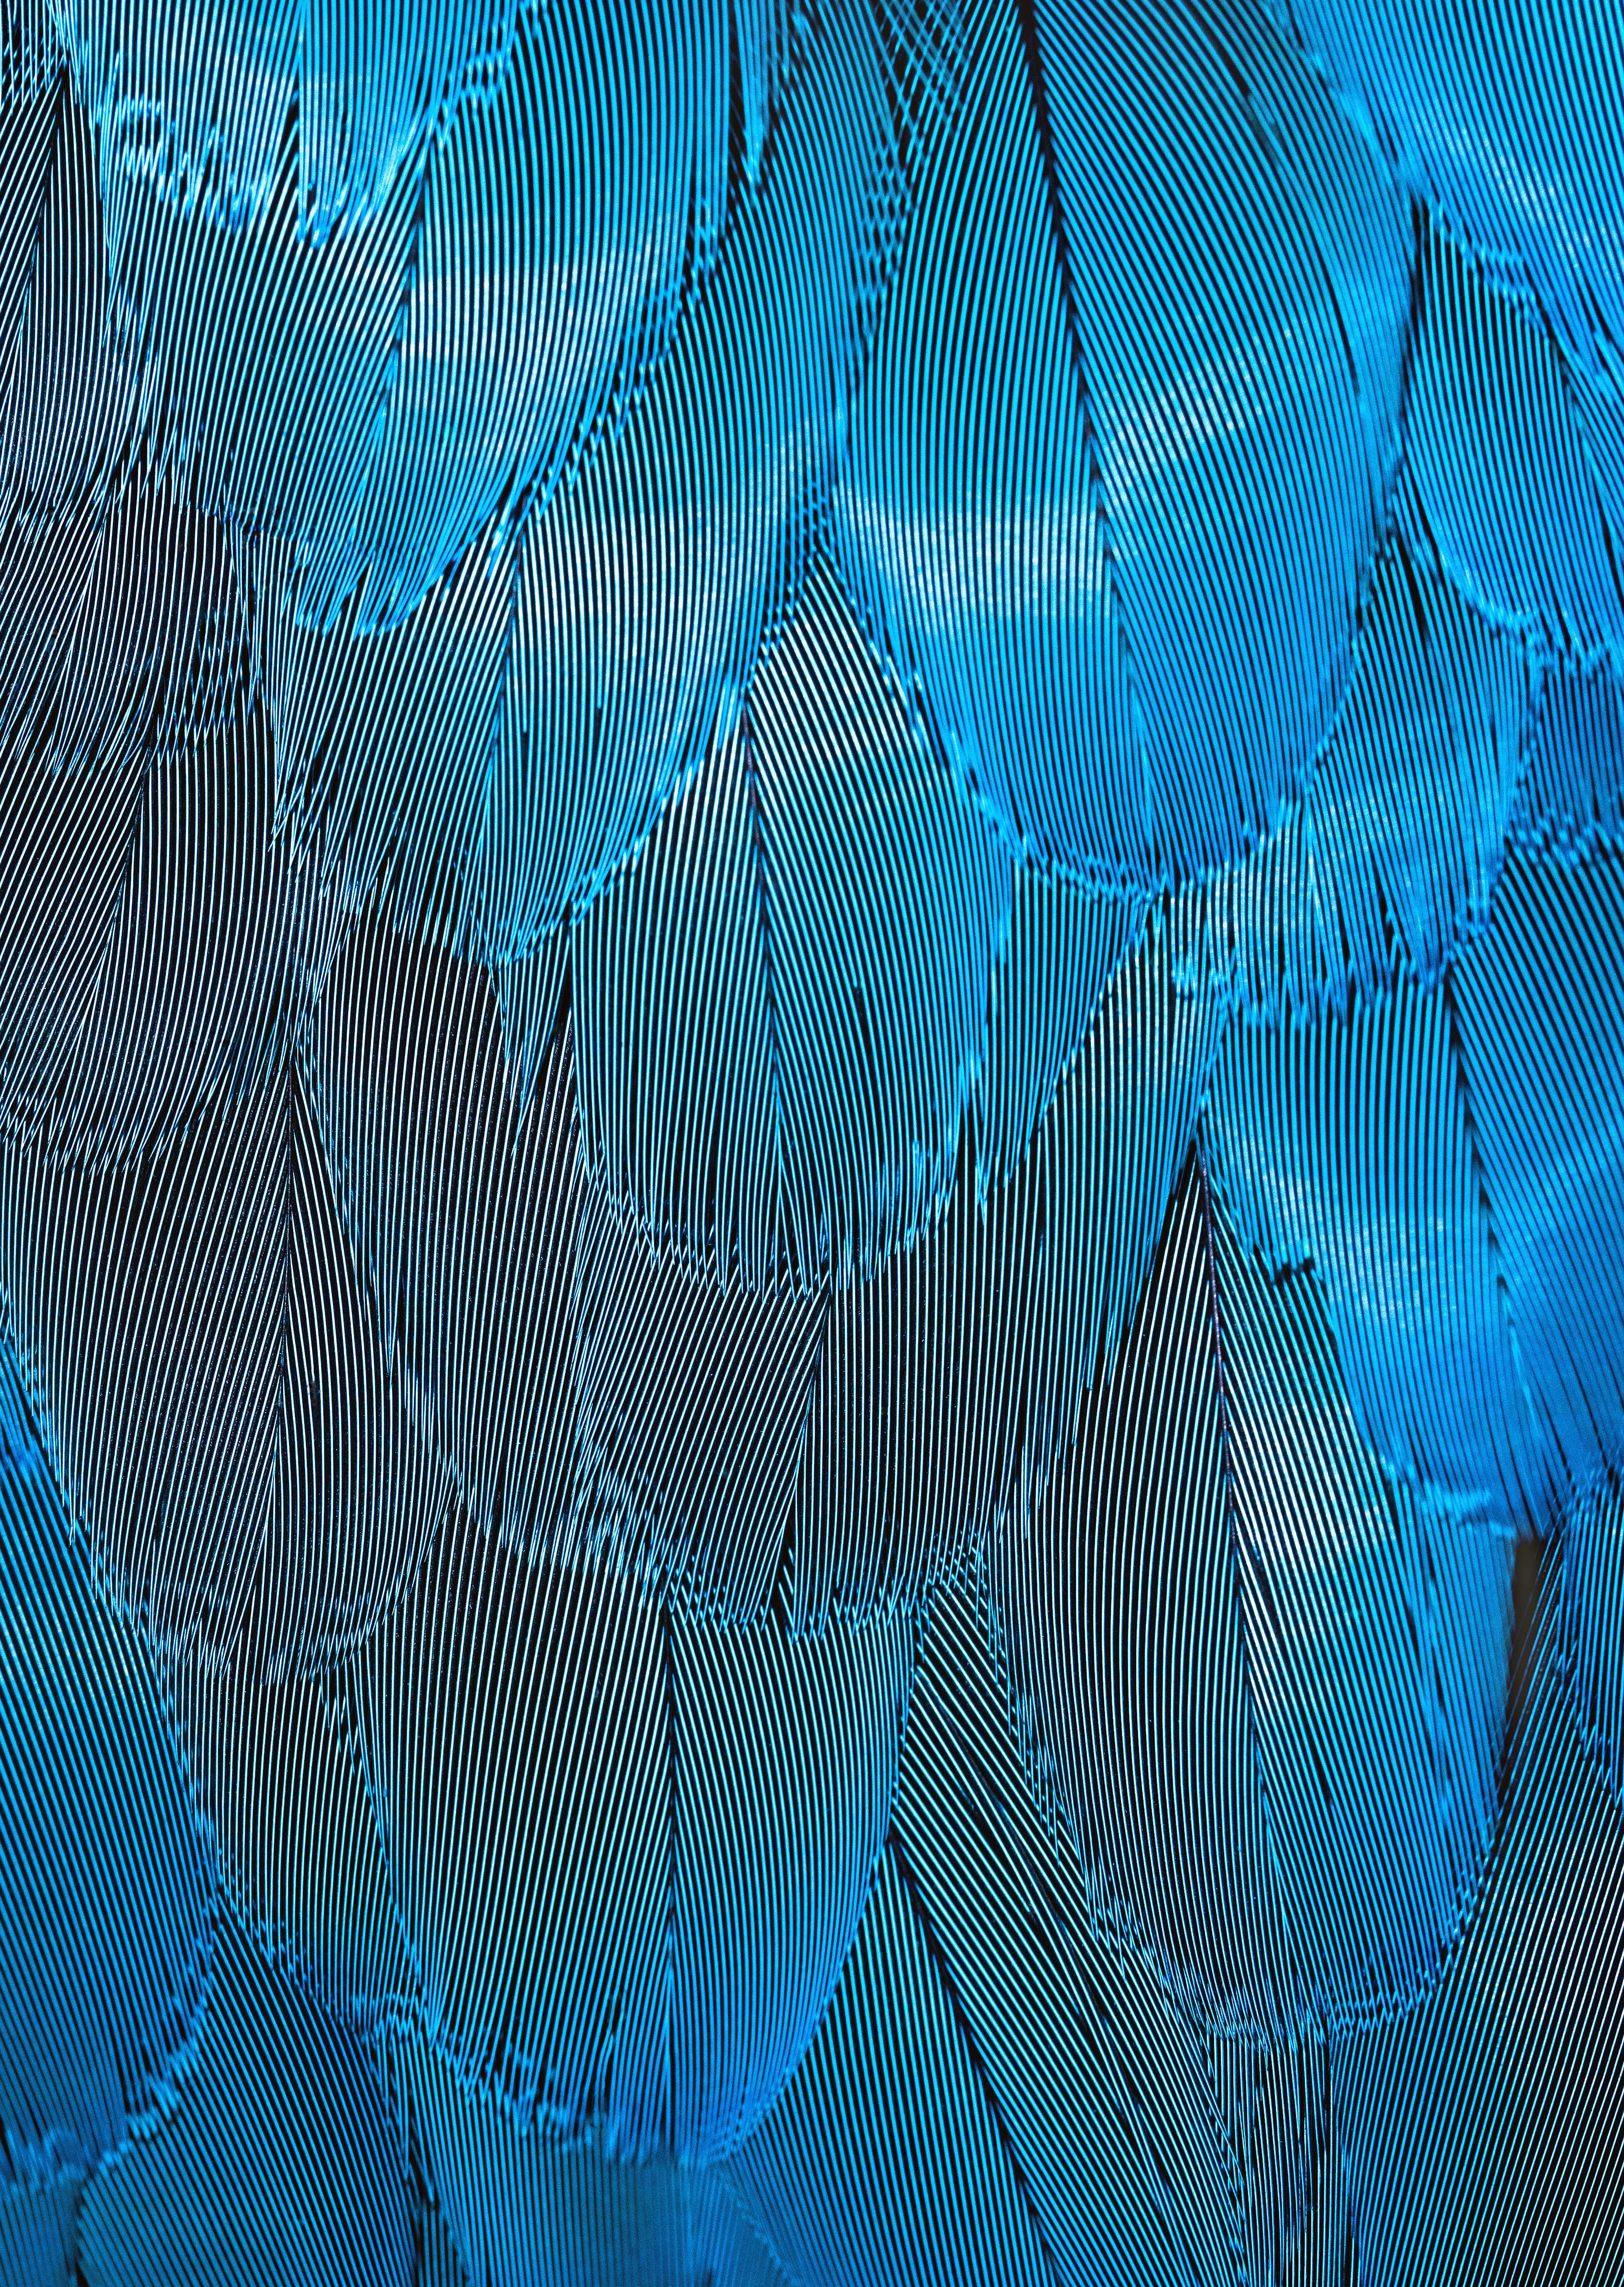 wallpapers macro, feather, textures, blue, texture, iridescent